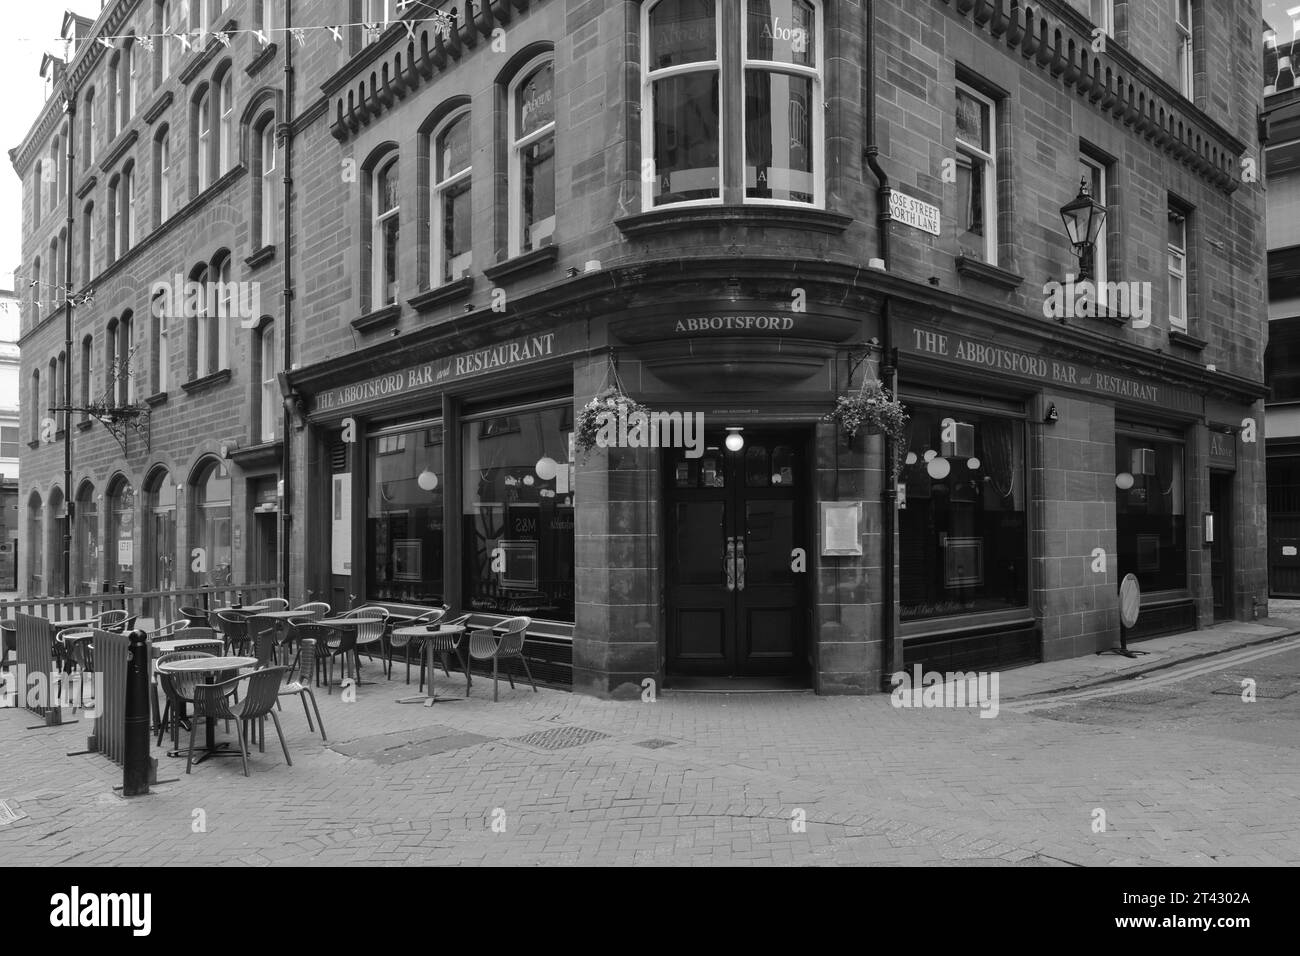 The Abbotsford Bar and Restaurant, Rose Street, Edinburgh City, Scotland, UK Stock Photo